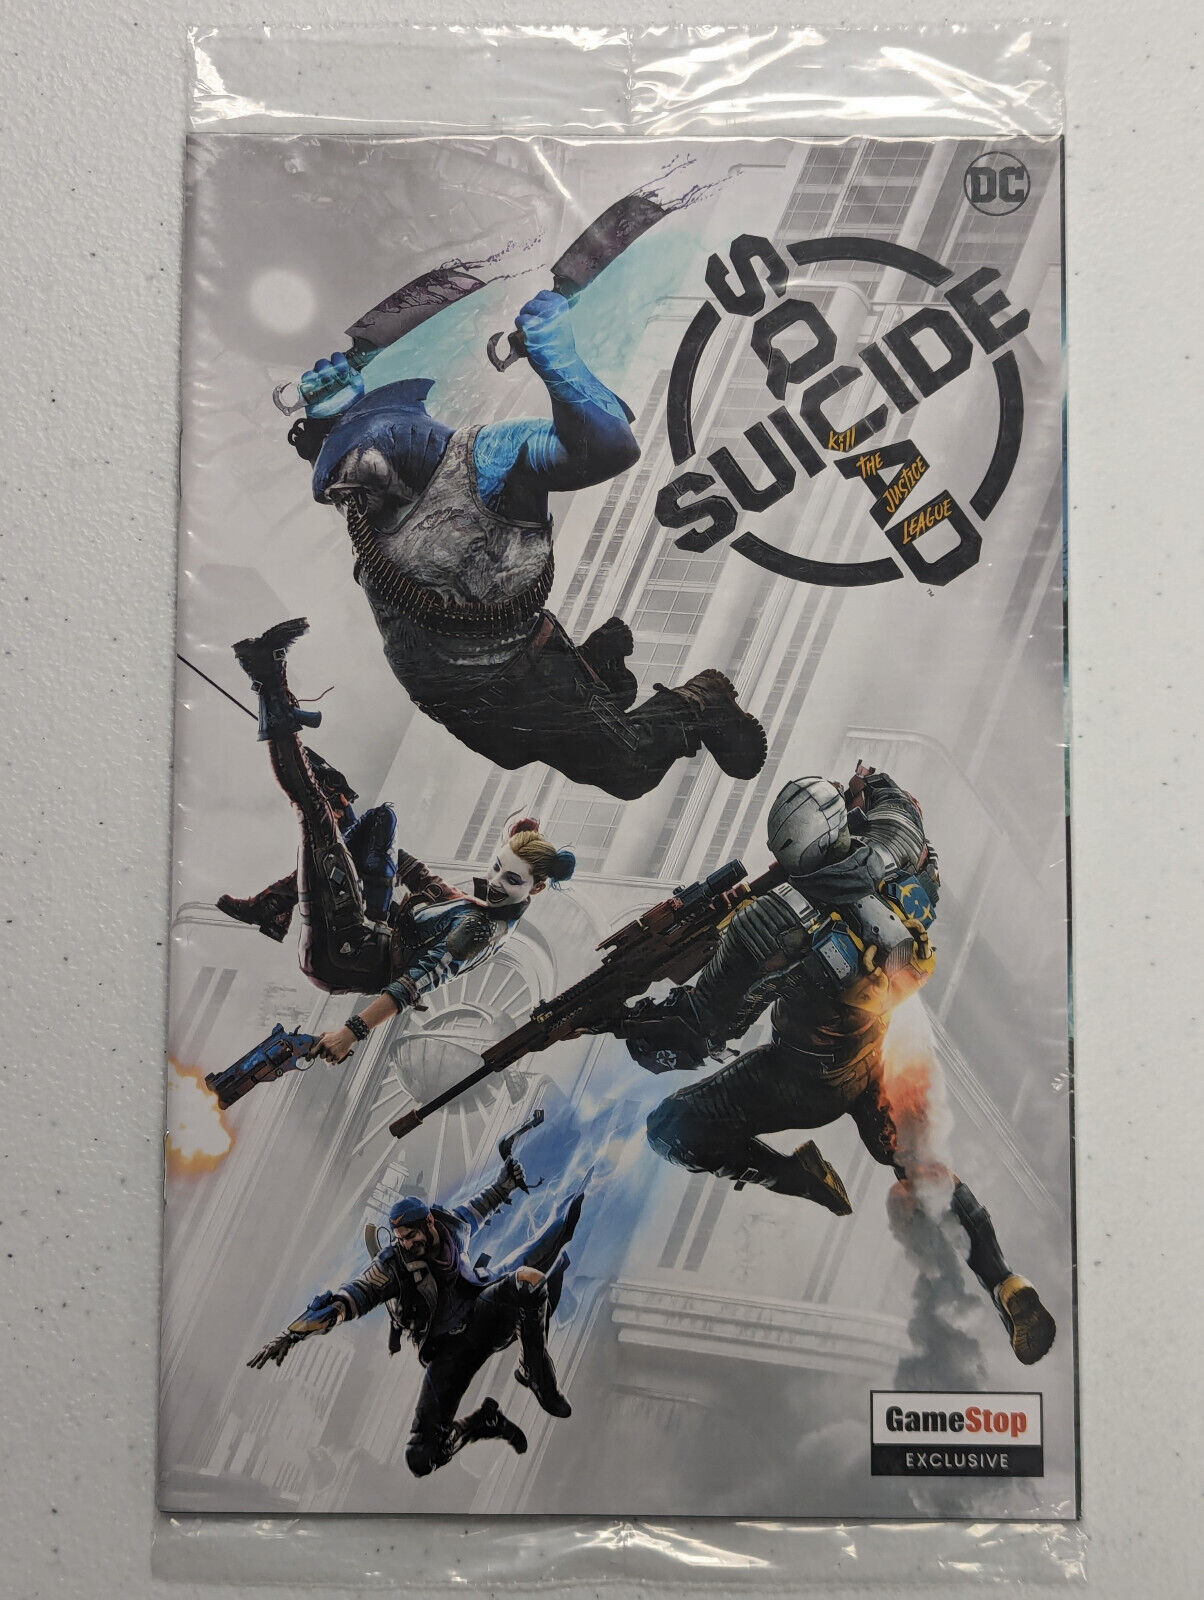 Suicide Squad The Game Comic Book Pre Order Bonus GameStop Issue #1